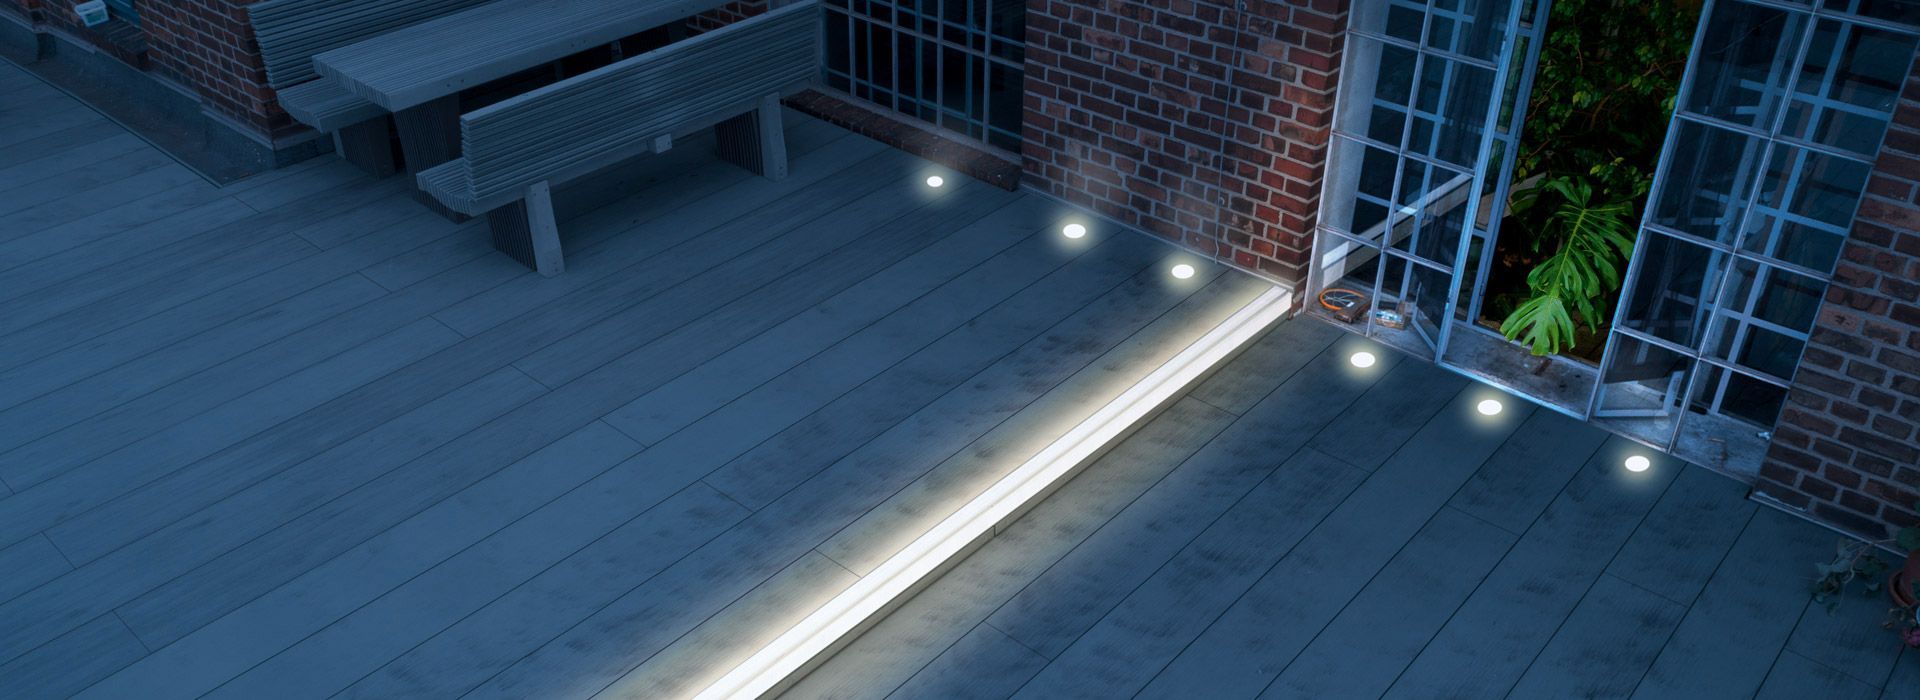 megalite LED light system